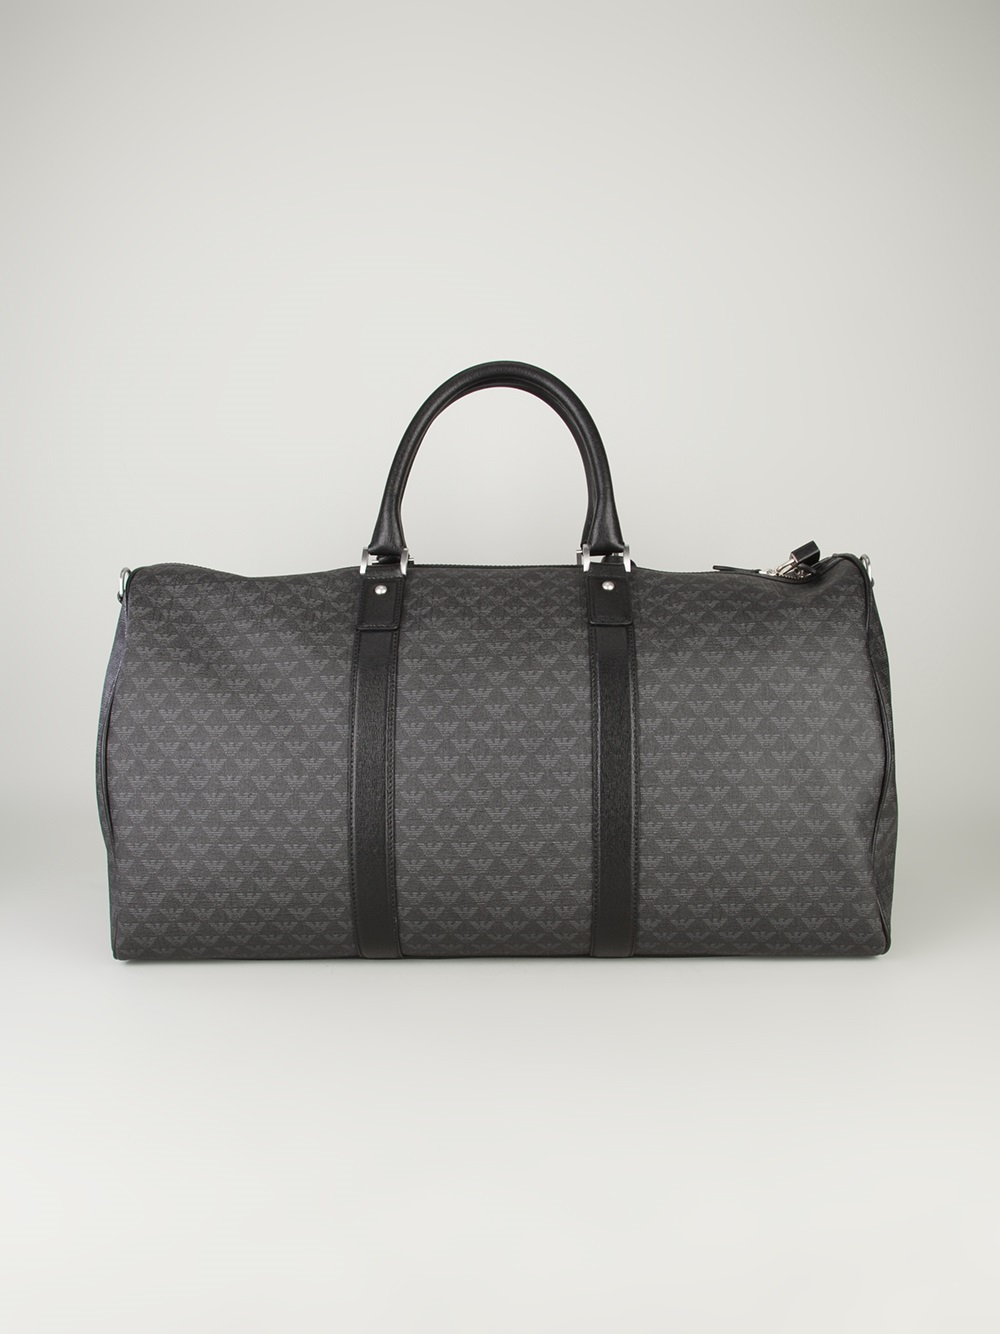 Emporio Armani Monogrammed Duffle Bag in Black for Men - Lyst